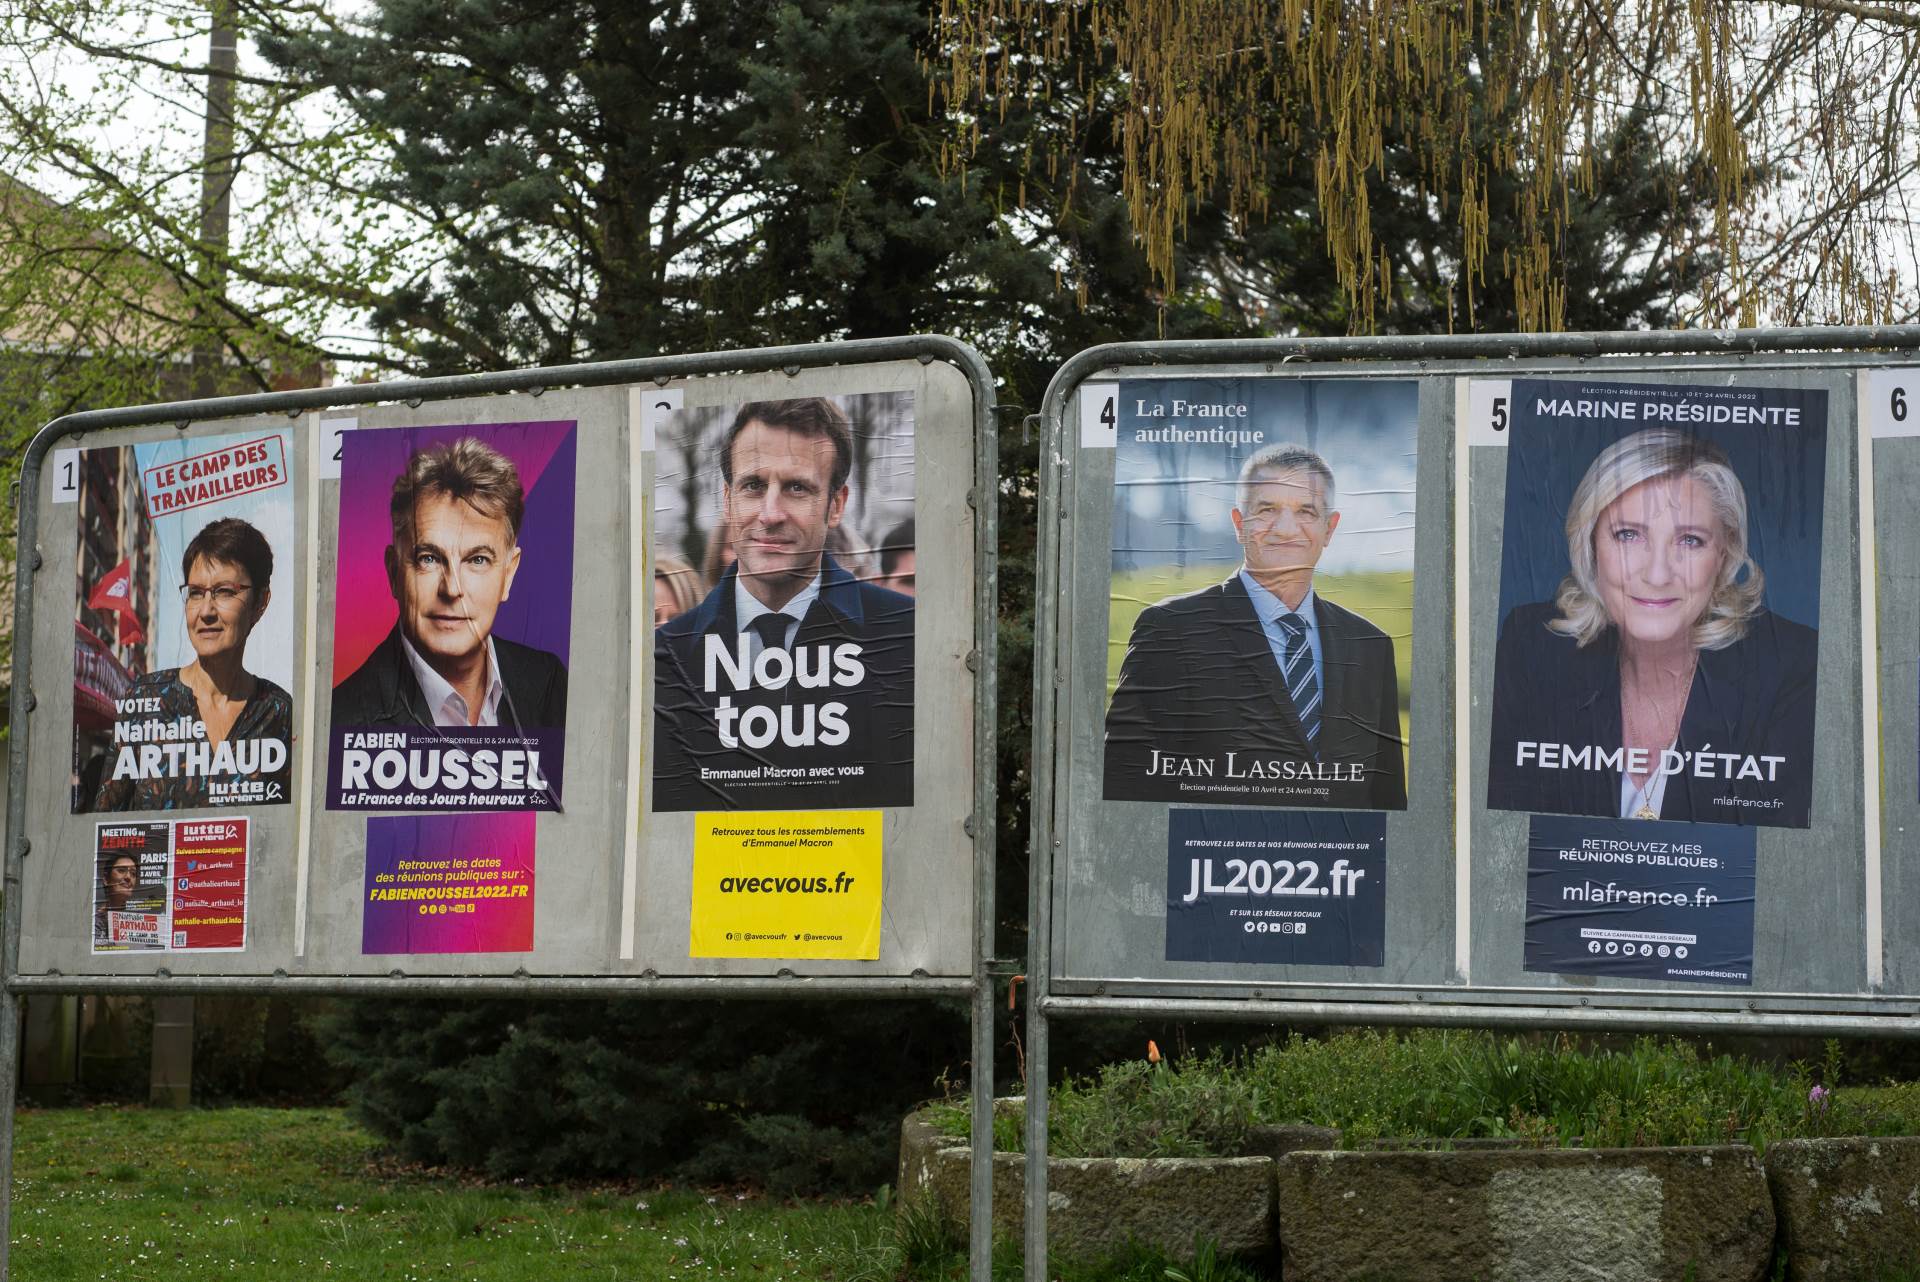  Makron i Le Pen prošli u drugi krug izbora 